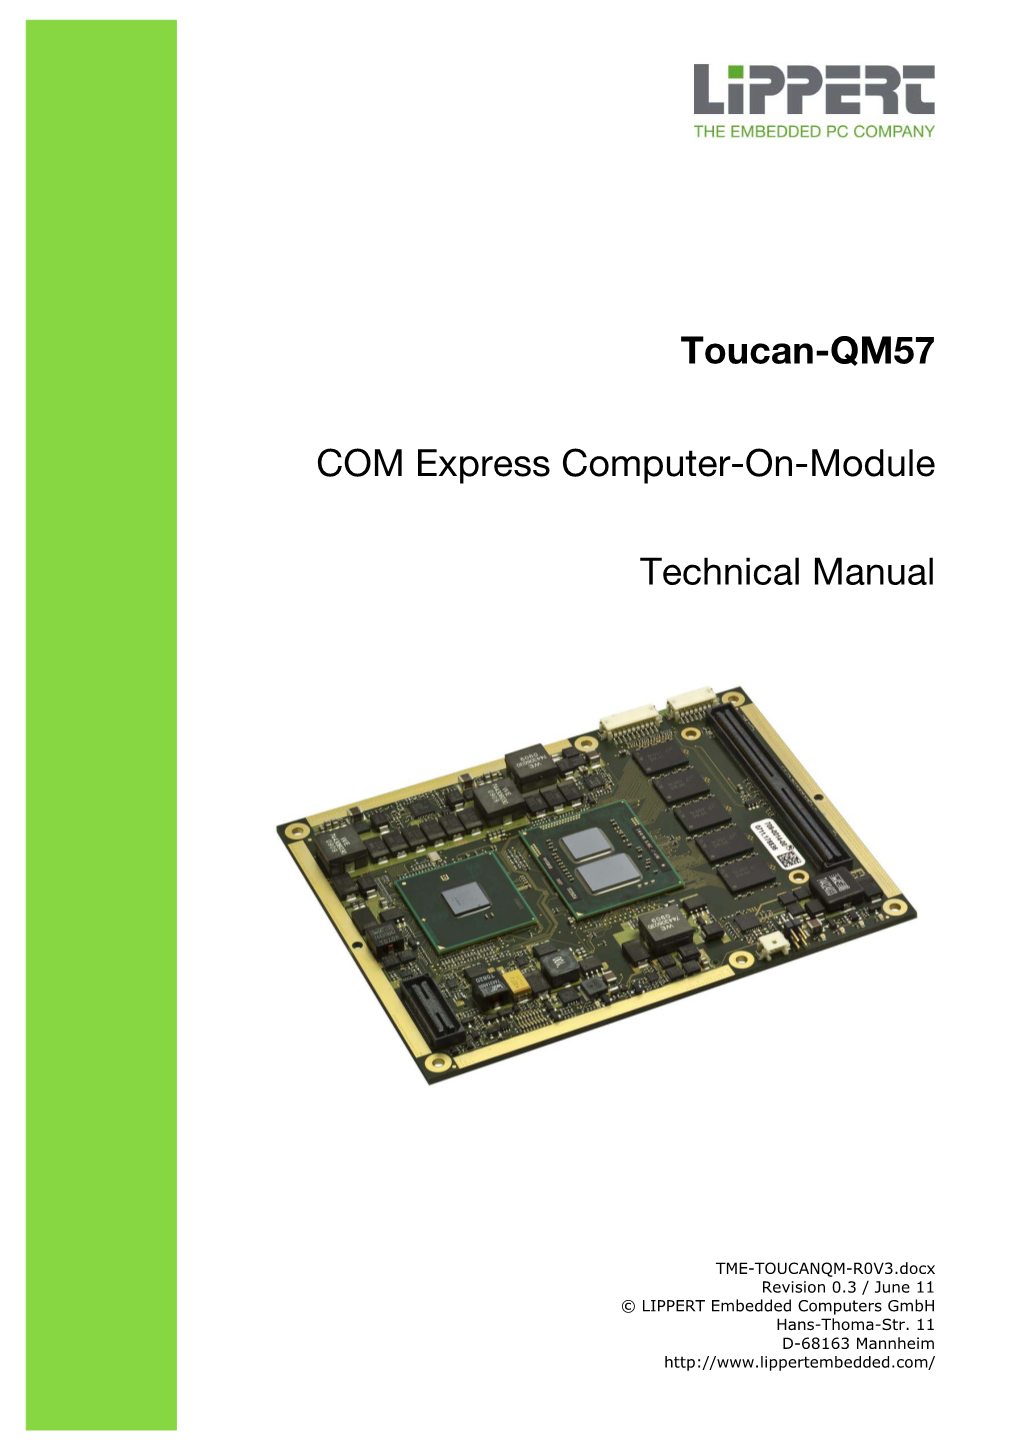 Toucan-QM57 COM Express Computer-On-Module Technical